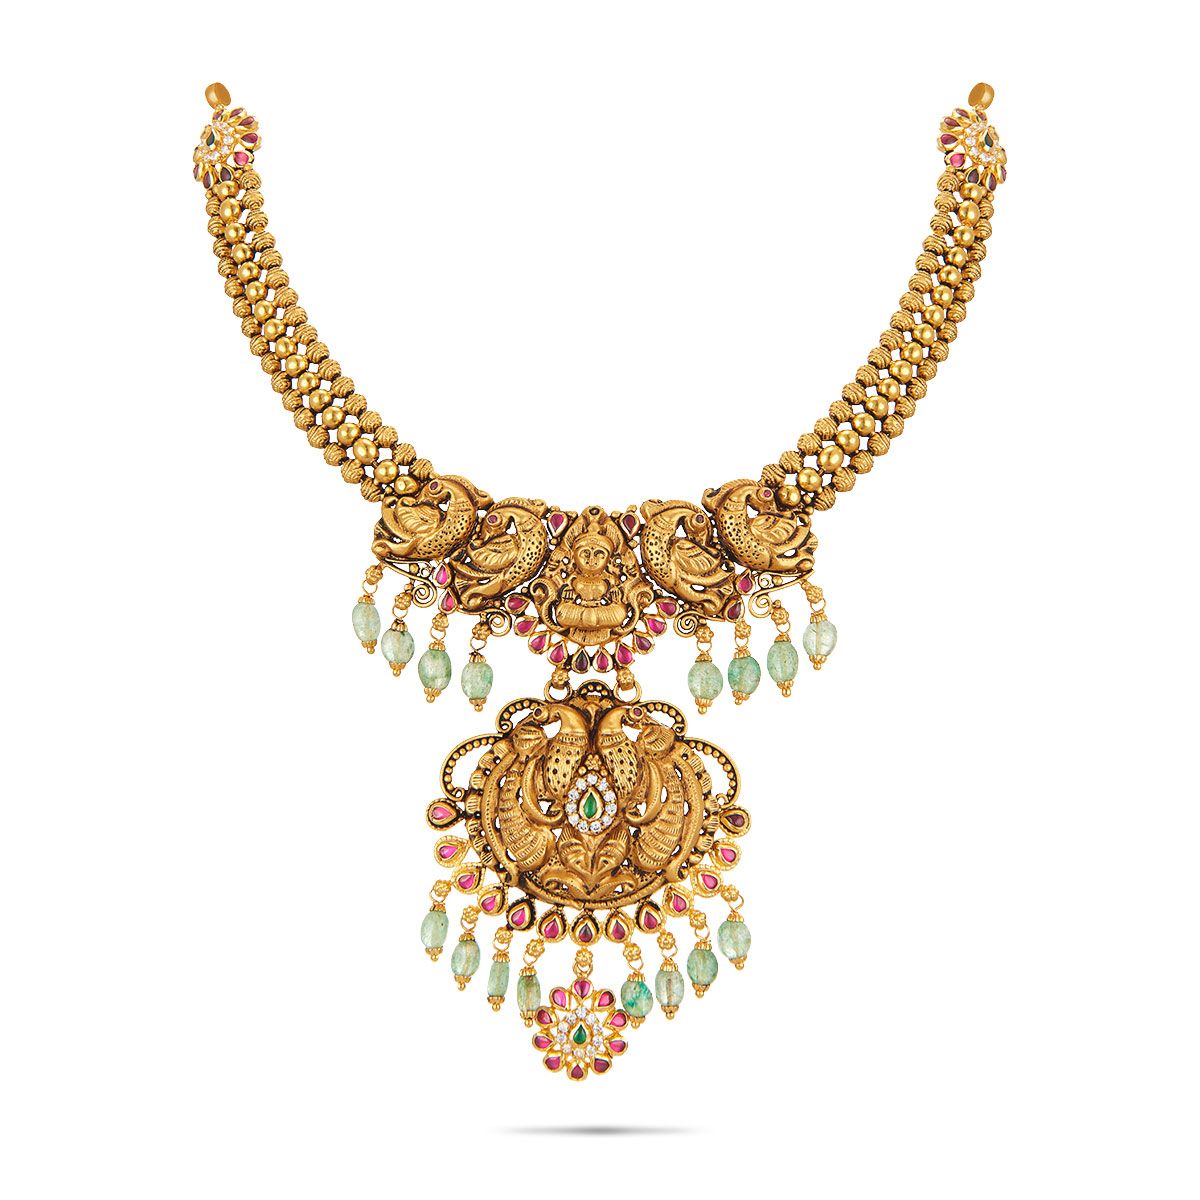 Royal Antique Peacock Necklace